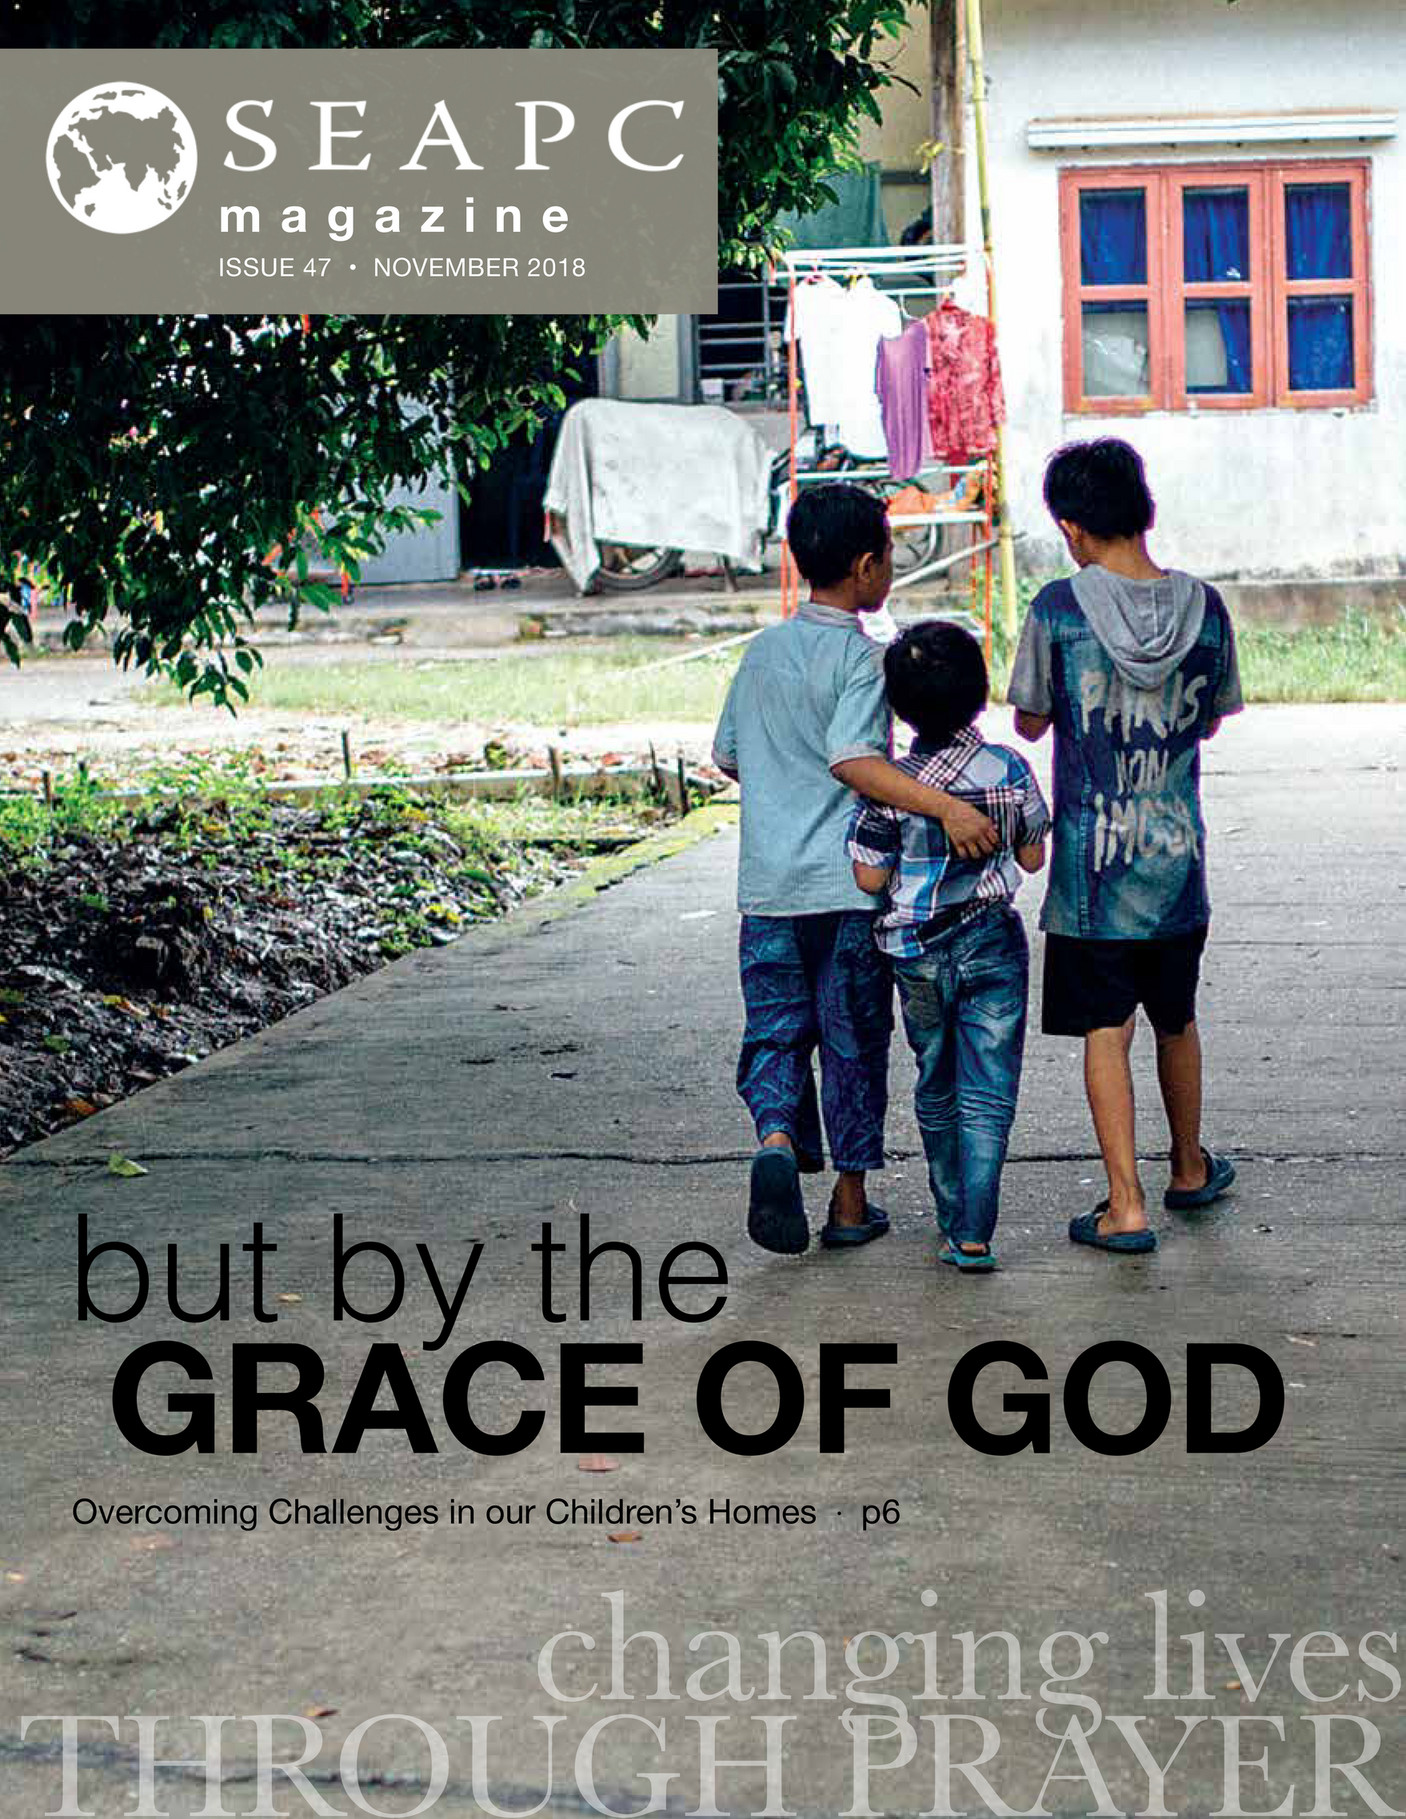 south-east-asia-prayer-center-seapc-magazine-november2018-page-1